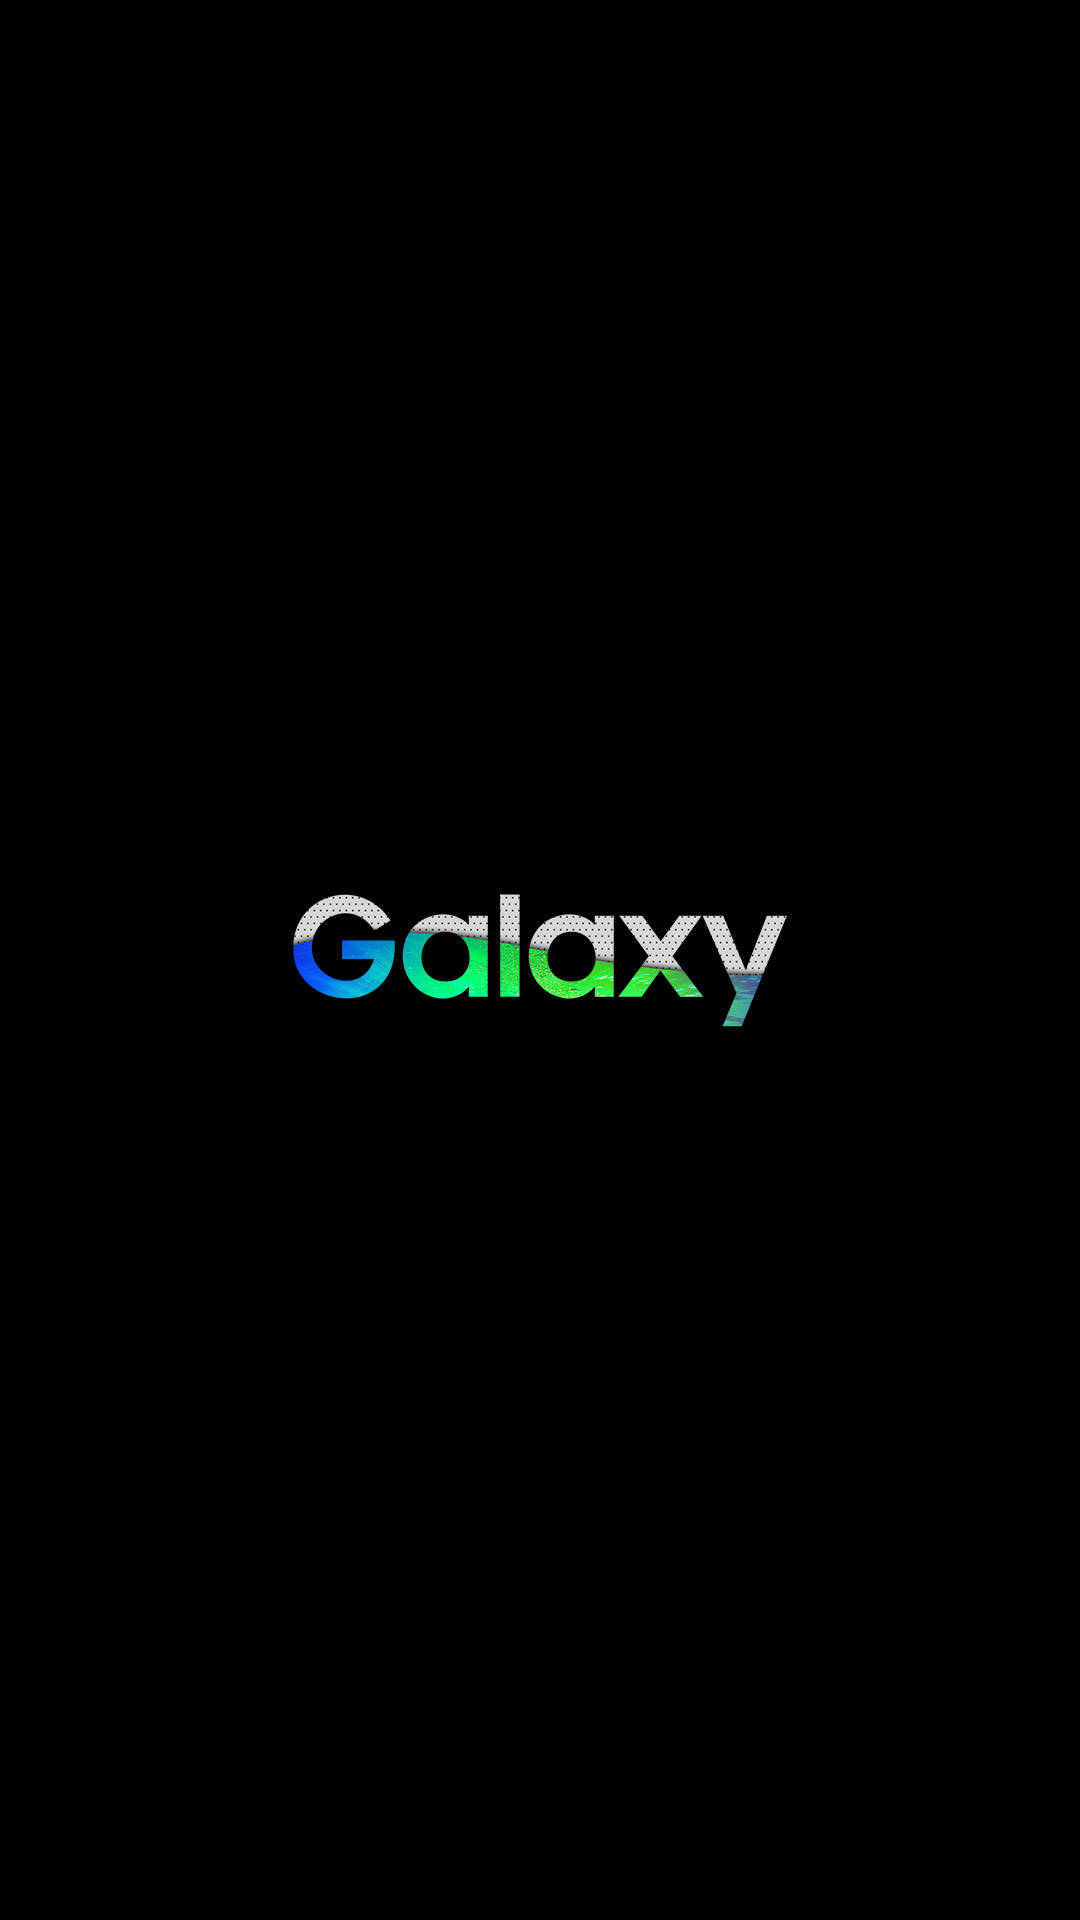 Samsung Galaxy Abstract Logo Pattern Background